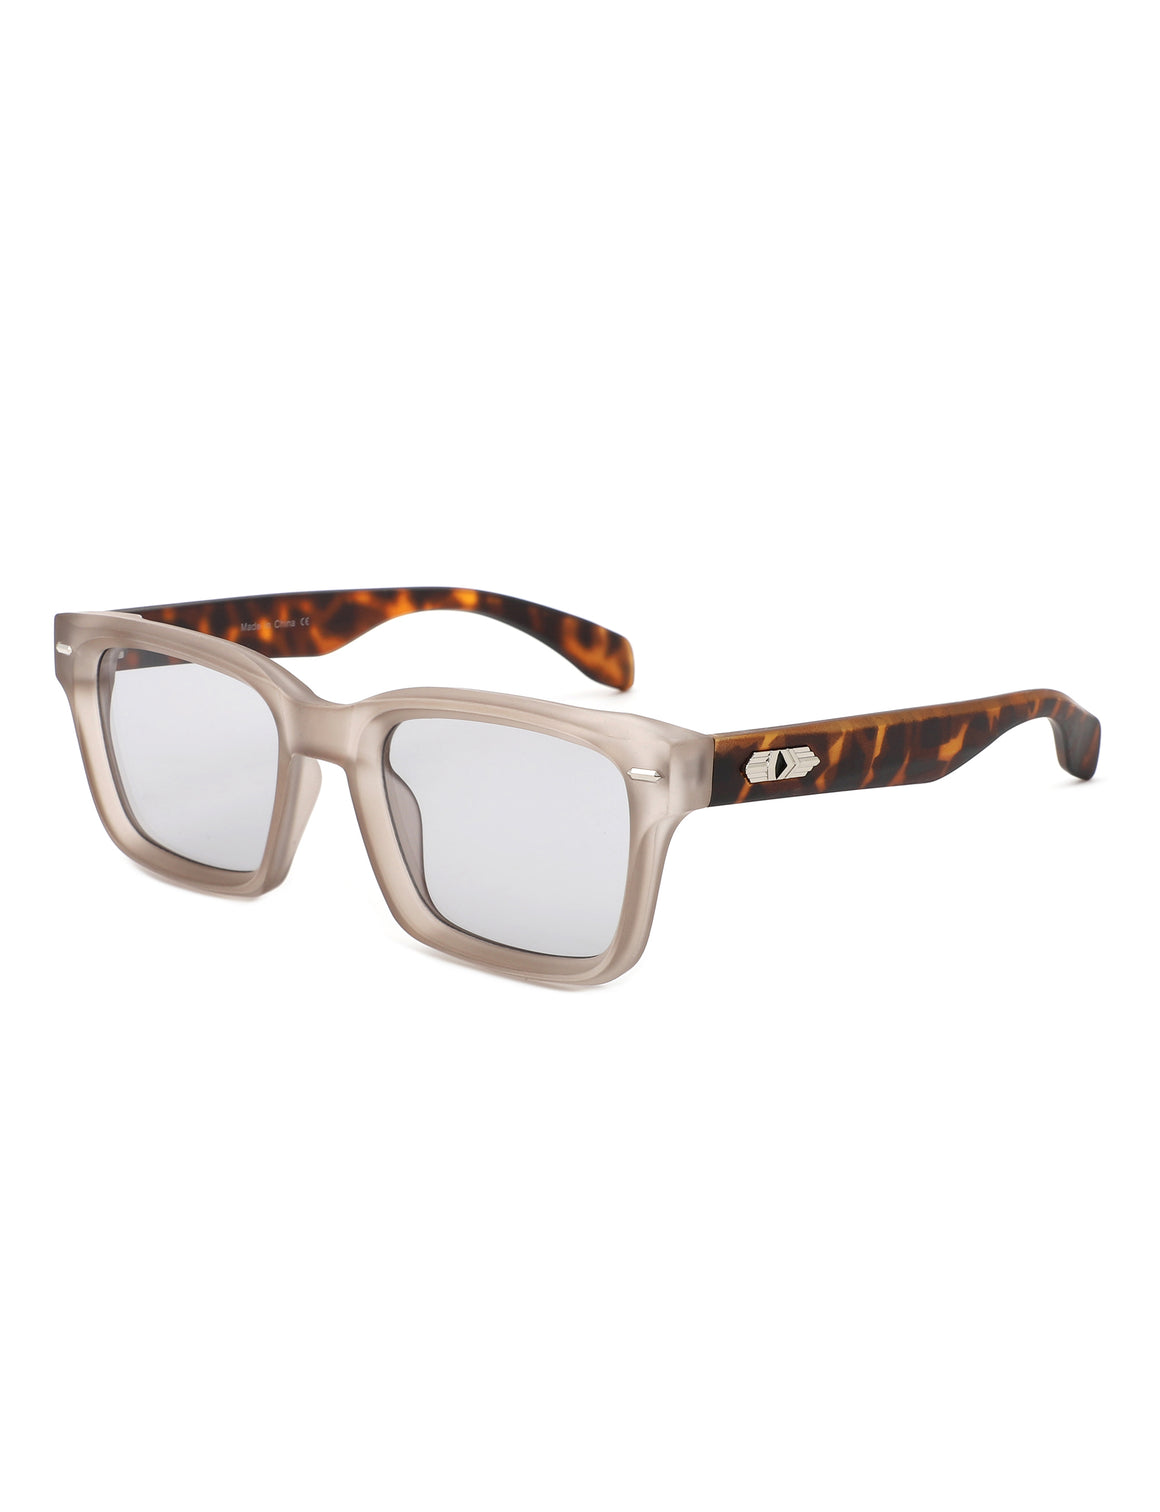 Cramilo Flat Top Sunglasses - Square Frame Women's Fashion Sun Glasses - UVA & UVB Protection Polycarbonate Lens Eyewear